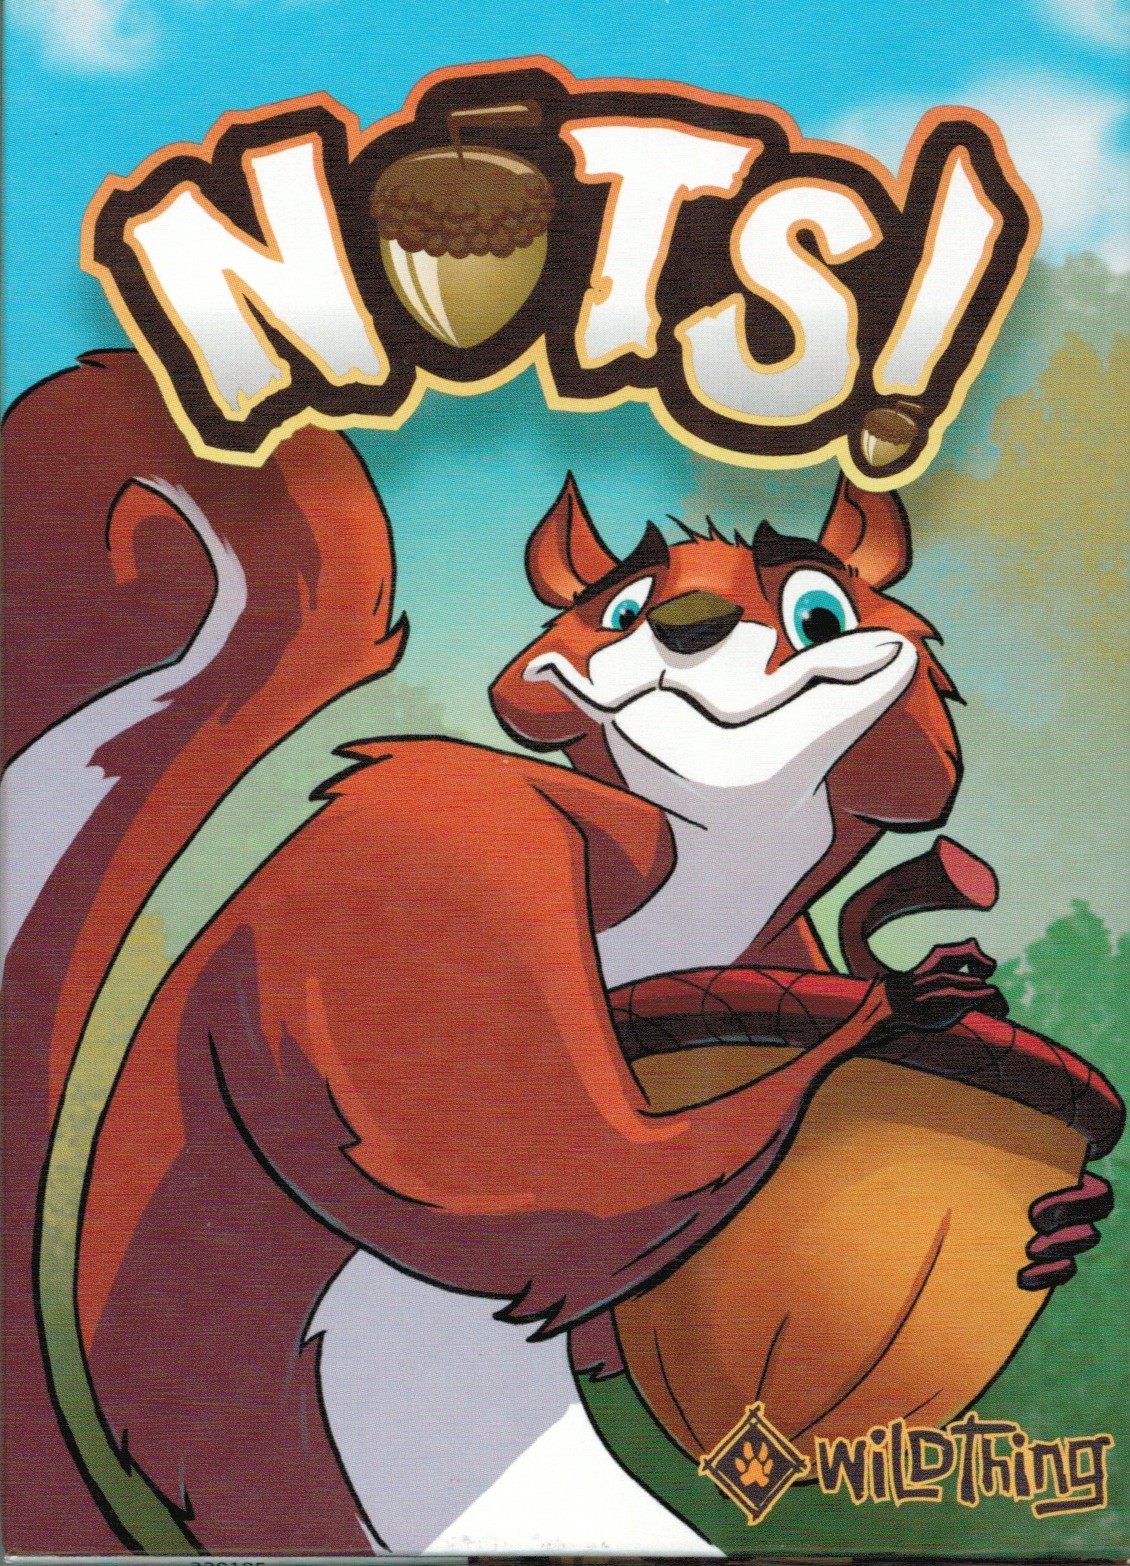 Game Night: Nuts!